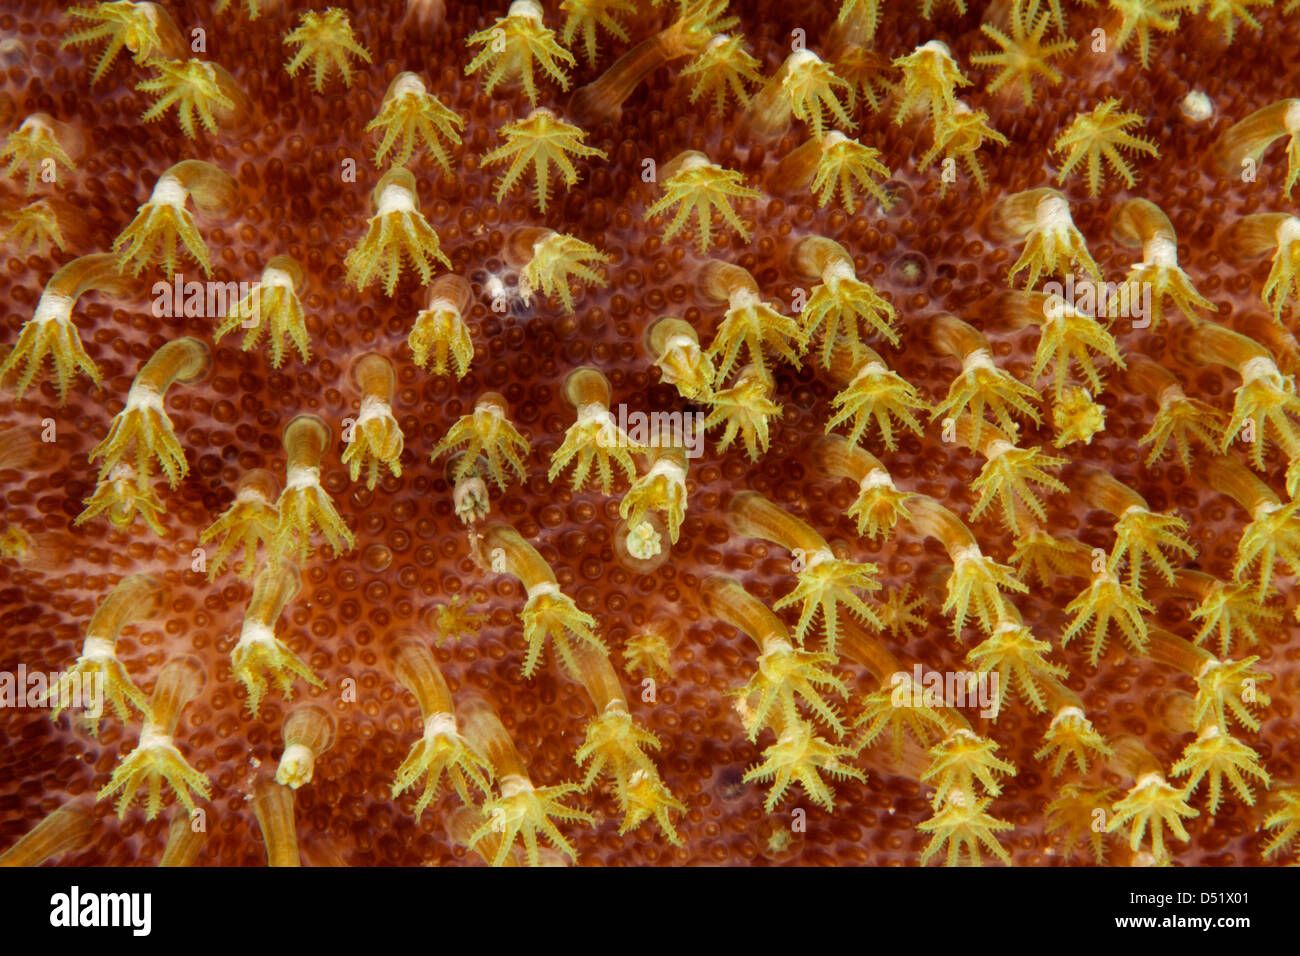 Soft coral polyps Stock Photo